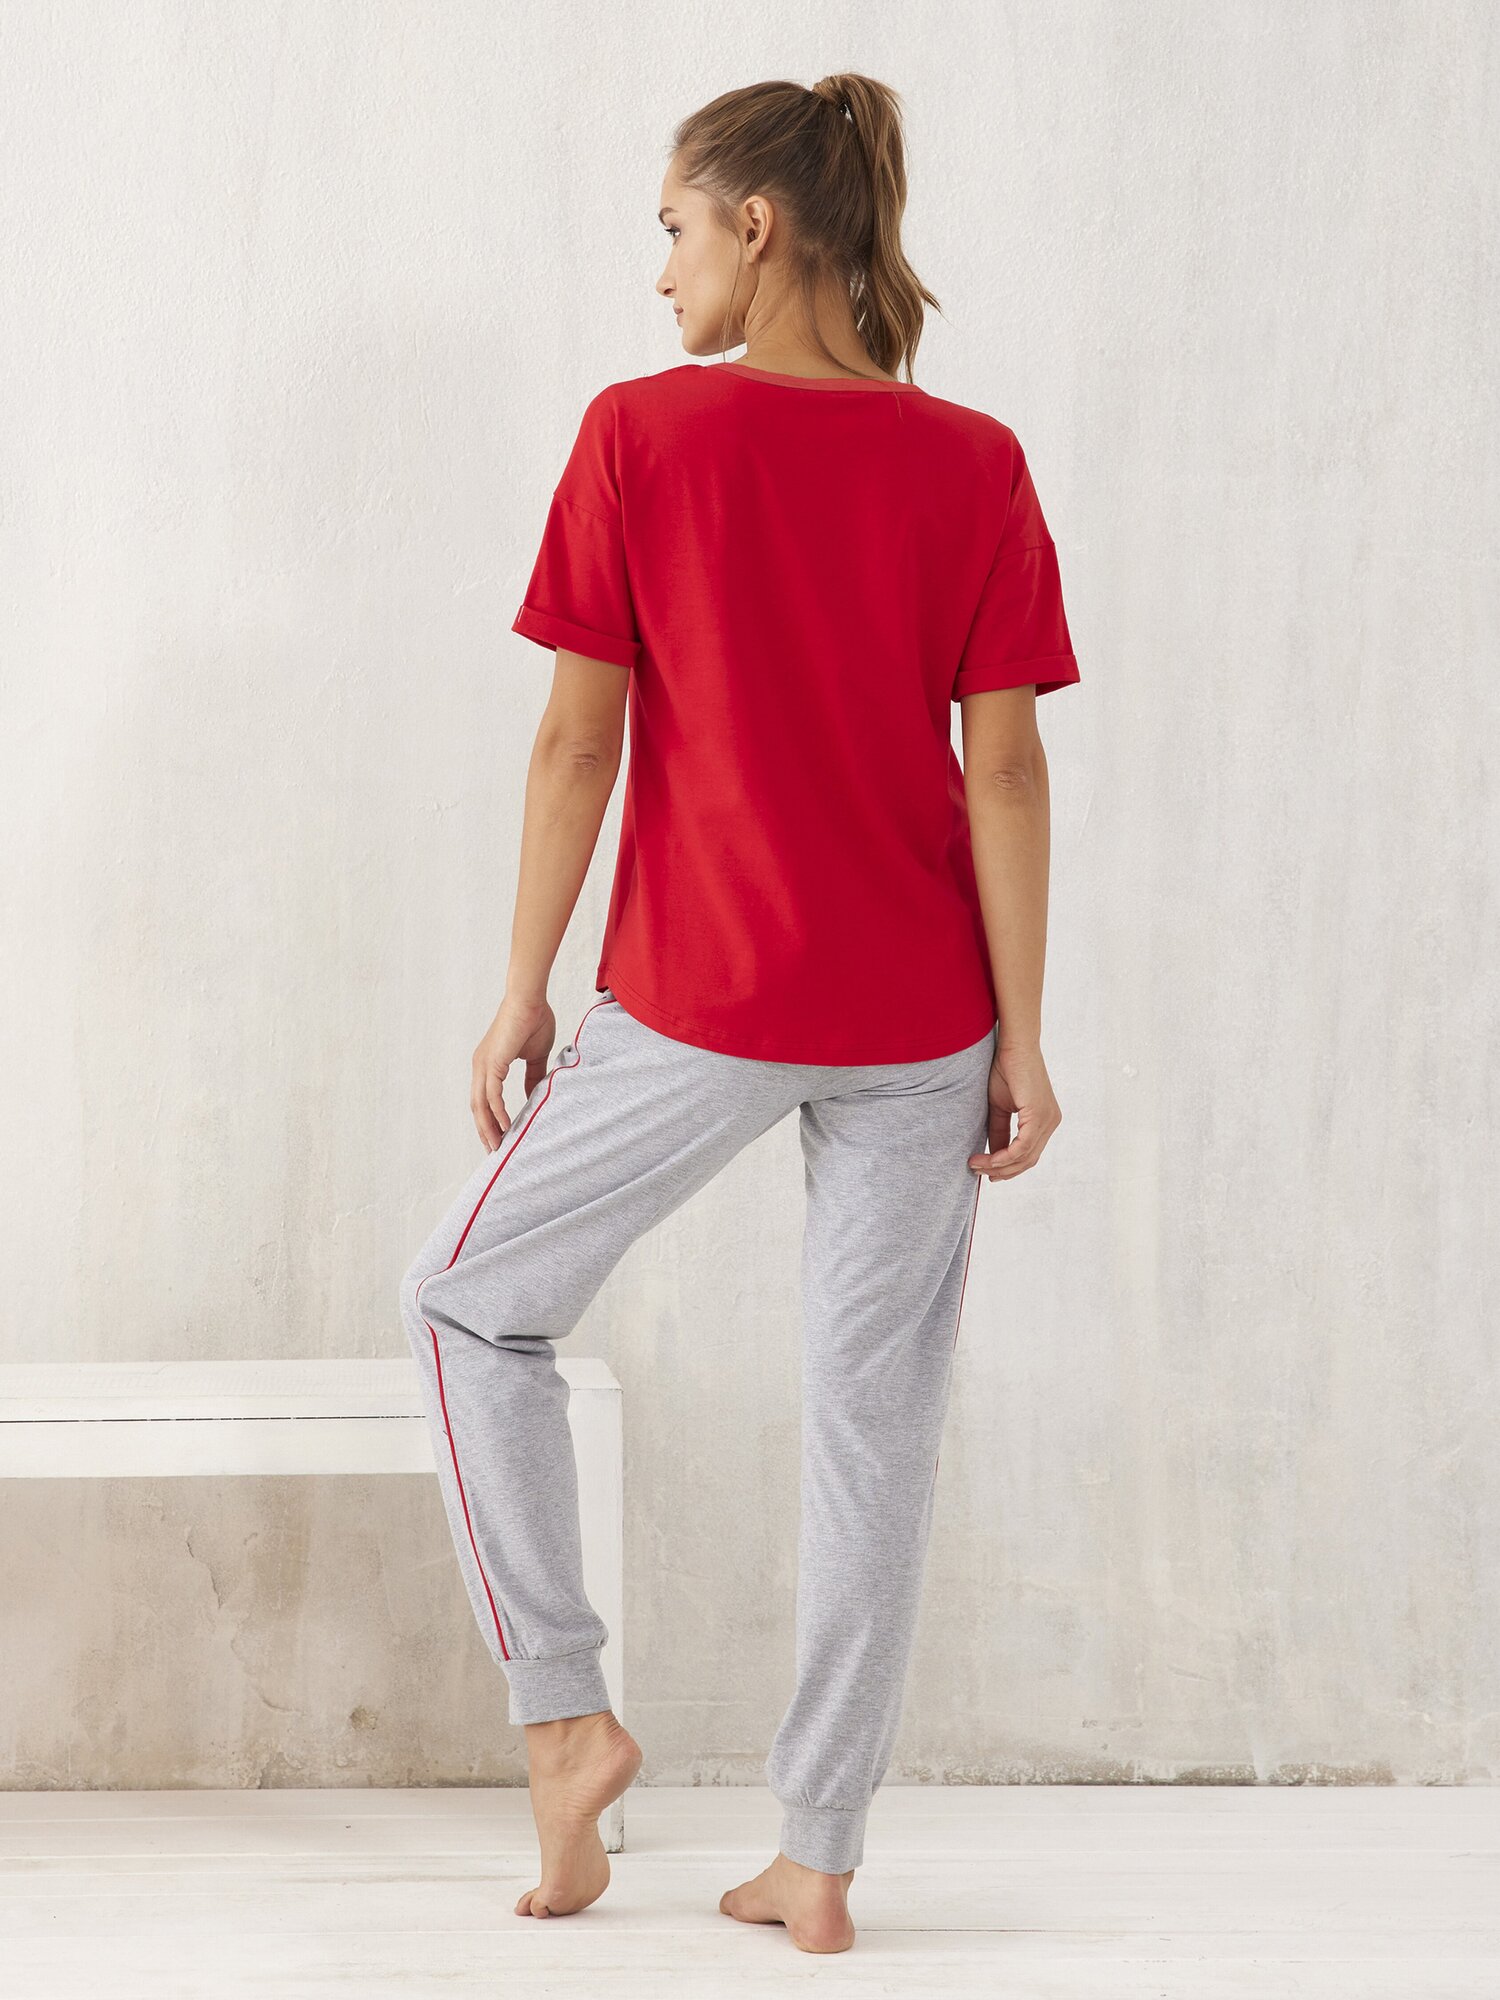 Пижама Relax Mode, размер 54, красный, серый - фотография № 4